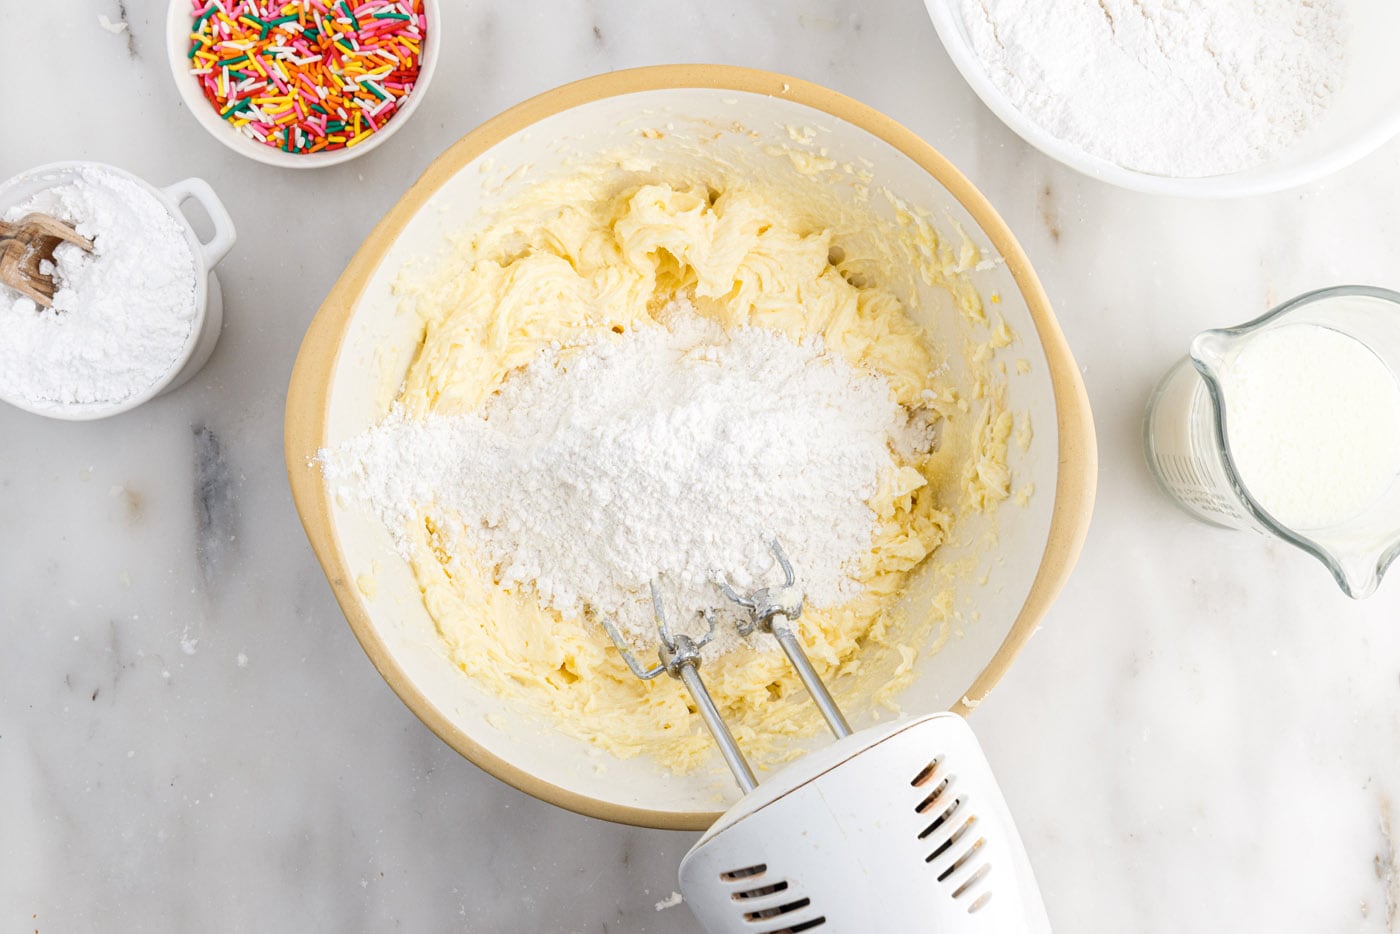 mixing flour mixture into butter mixture